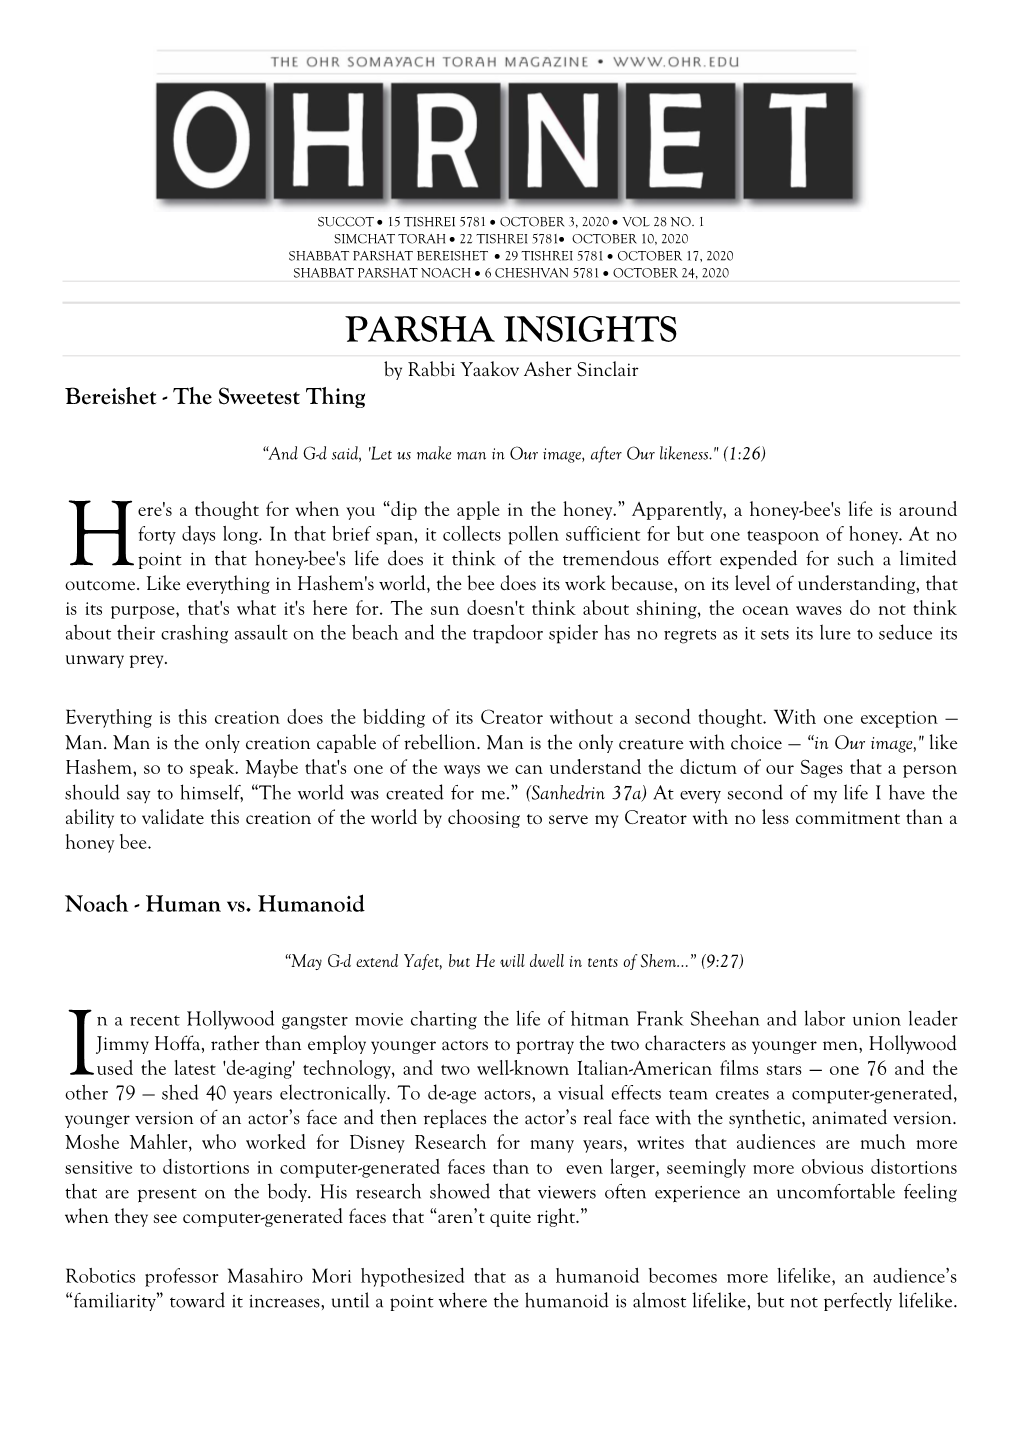 PARSHA INSIGHTS by Rabbi Yaakov Asher Sinclair Bereishet - the Sweetest Thing